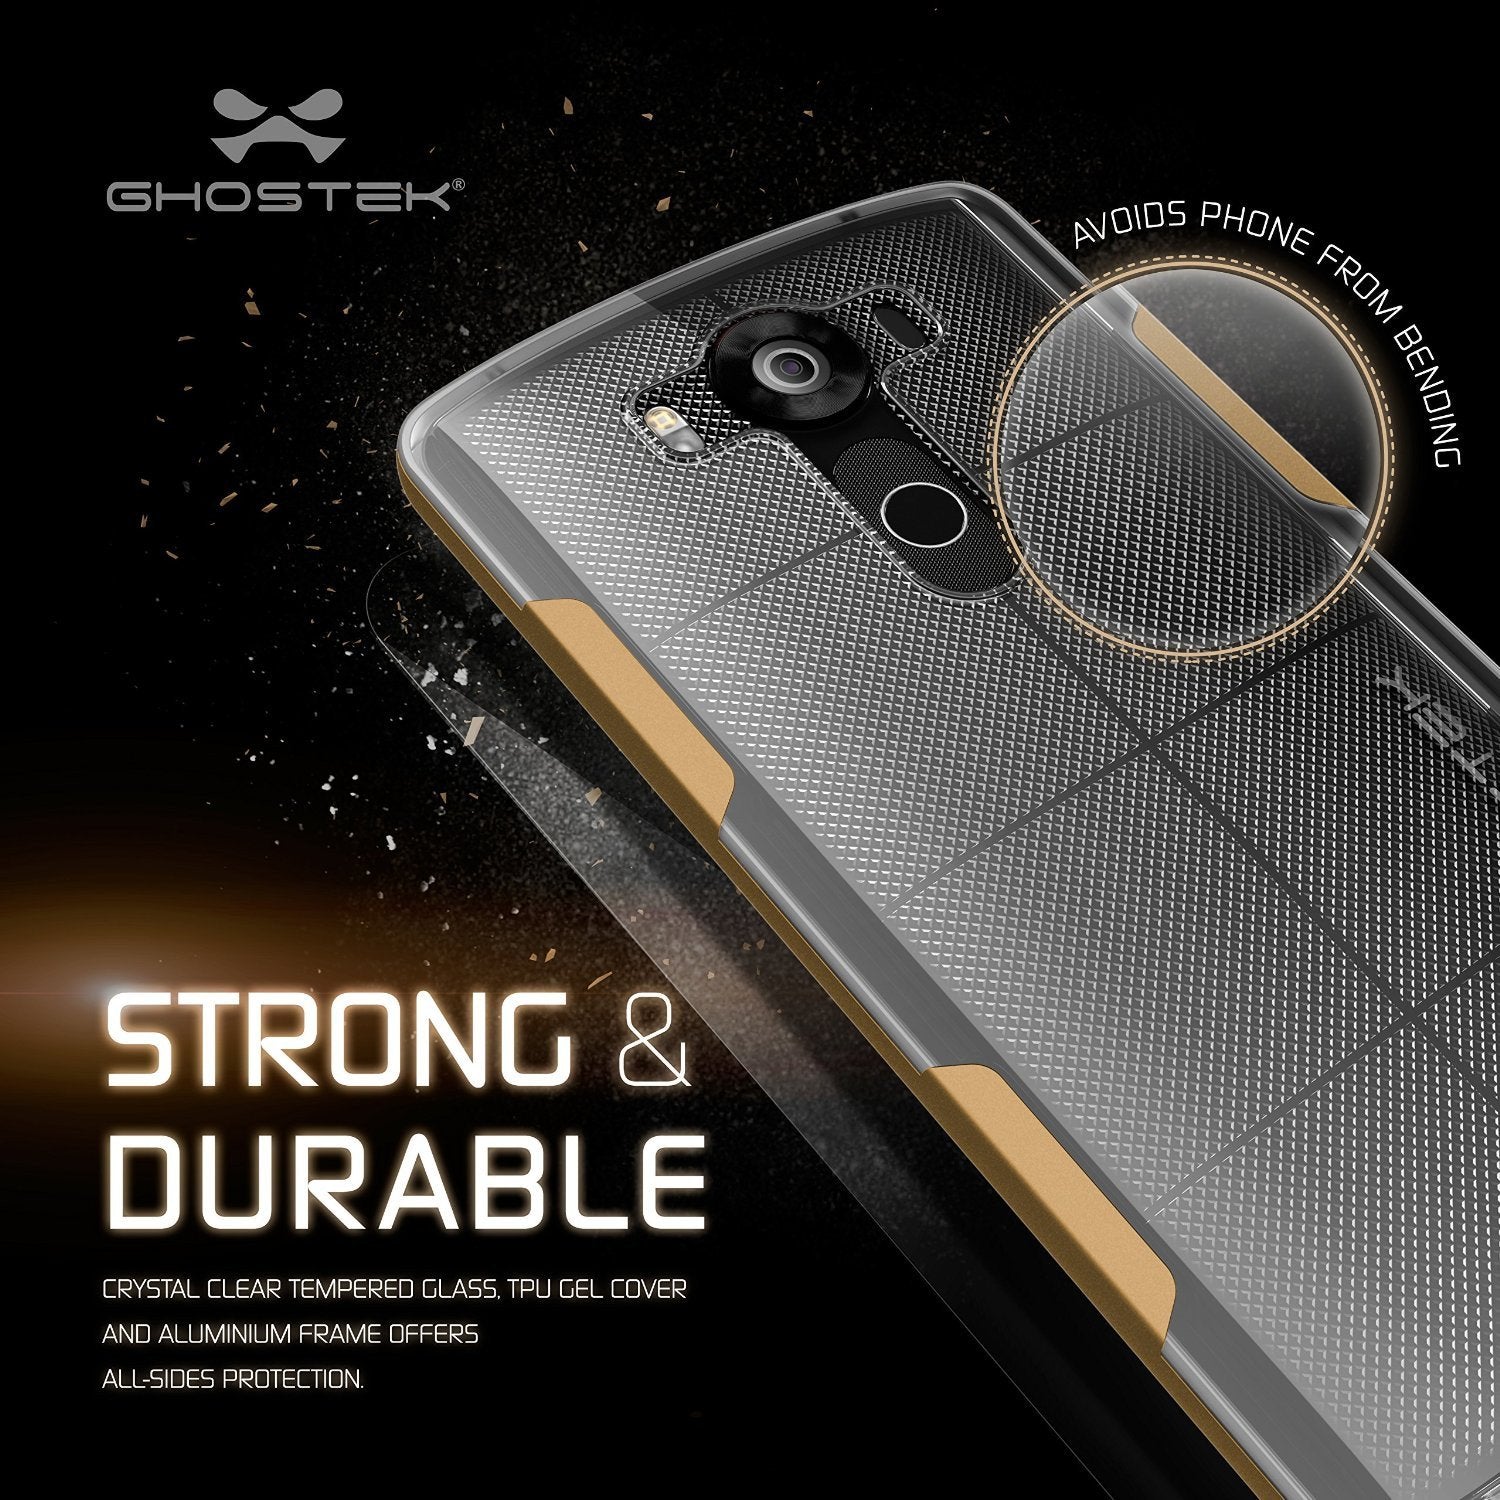 LG V10 Case, Ghostek® Cloak Gold Slim Hybrid Impact Armor Cover | Lifetime Warranty Exchange - PunkCase NZ